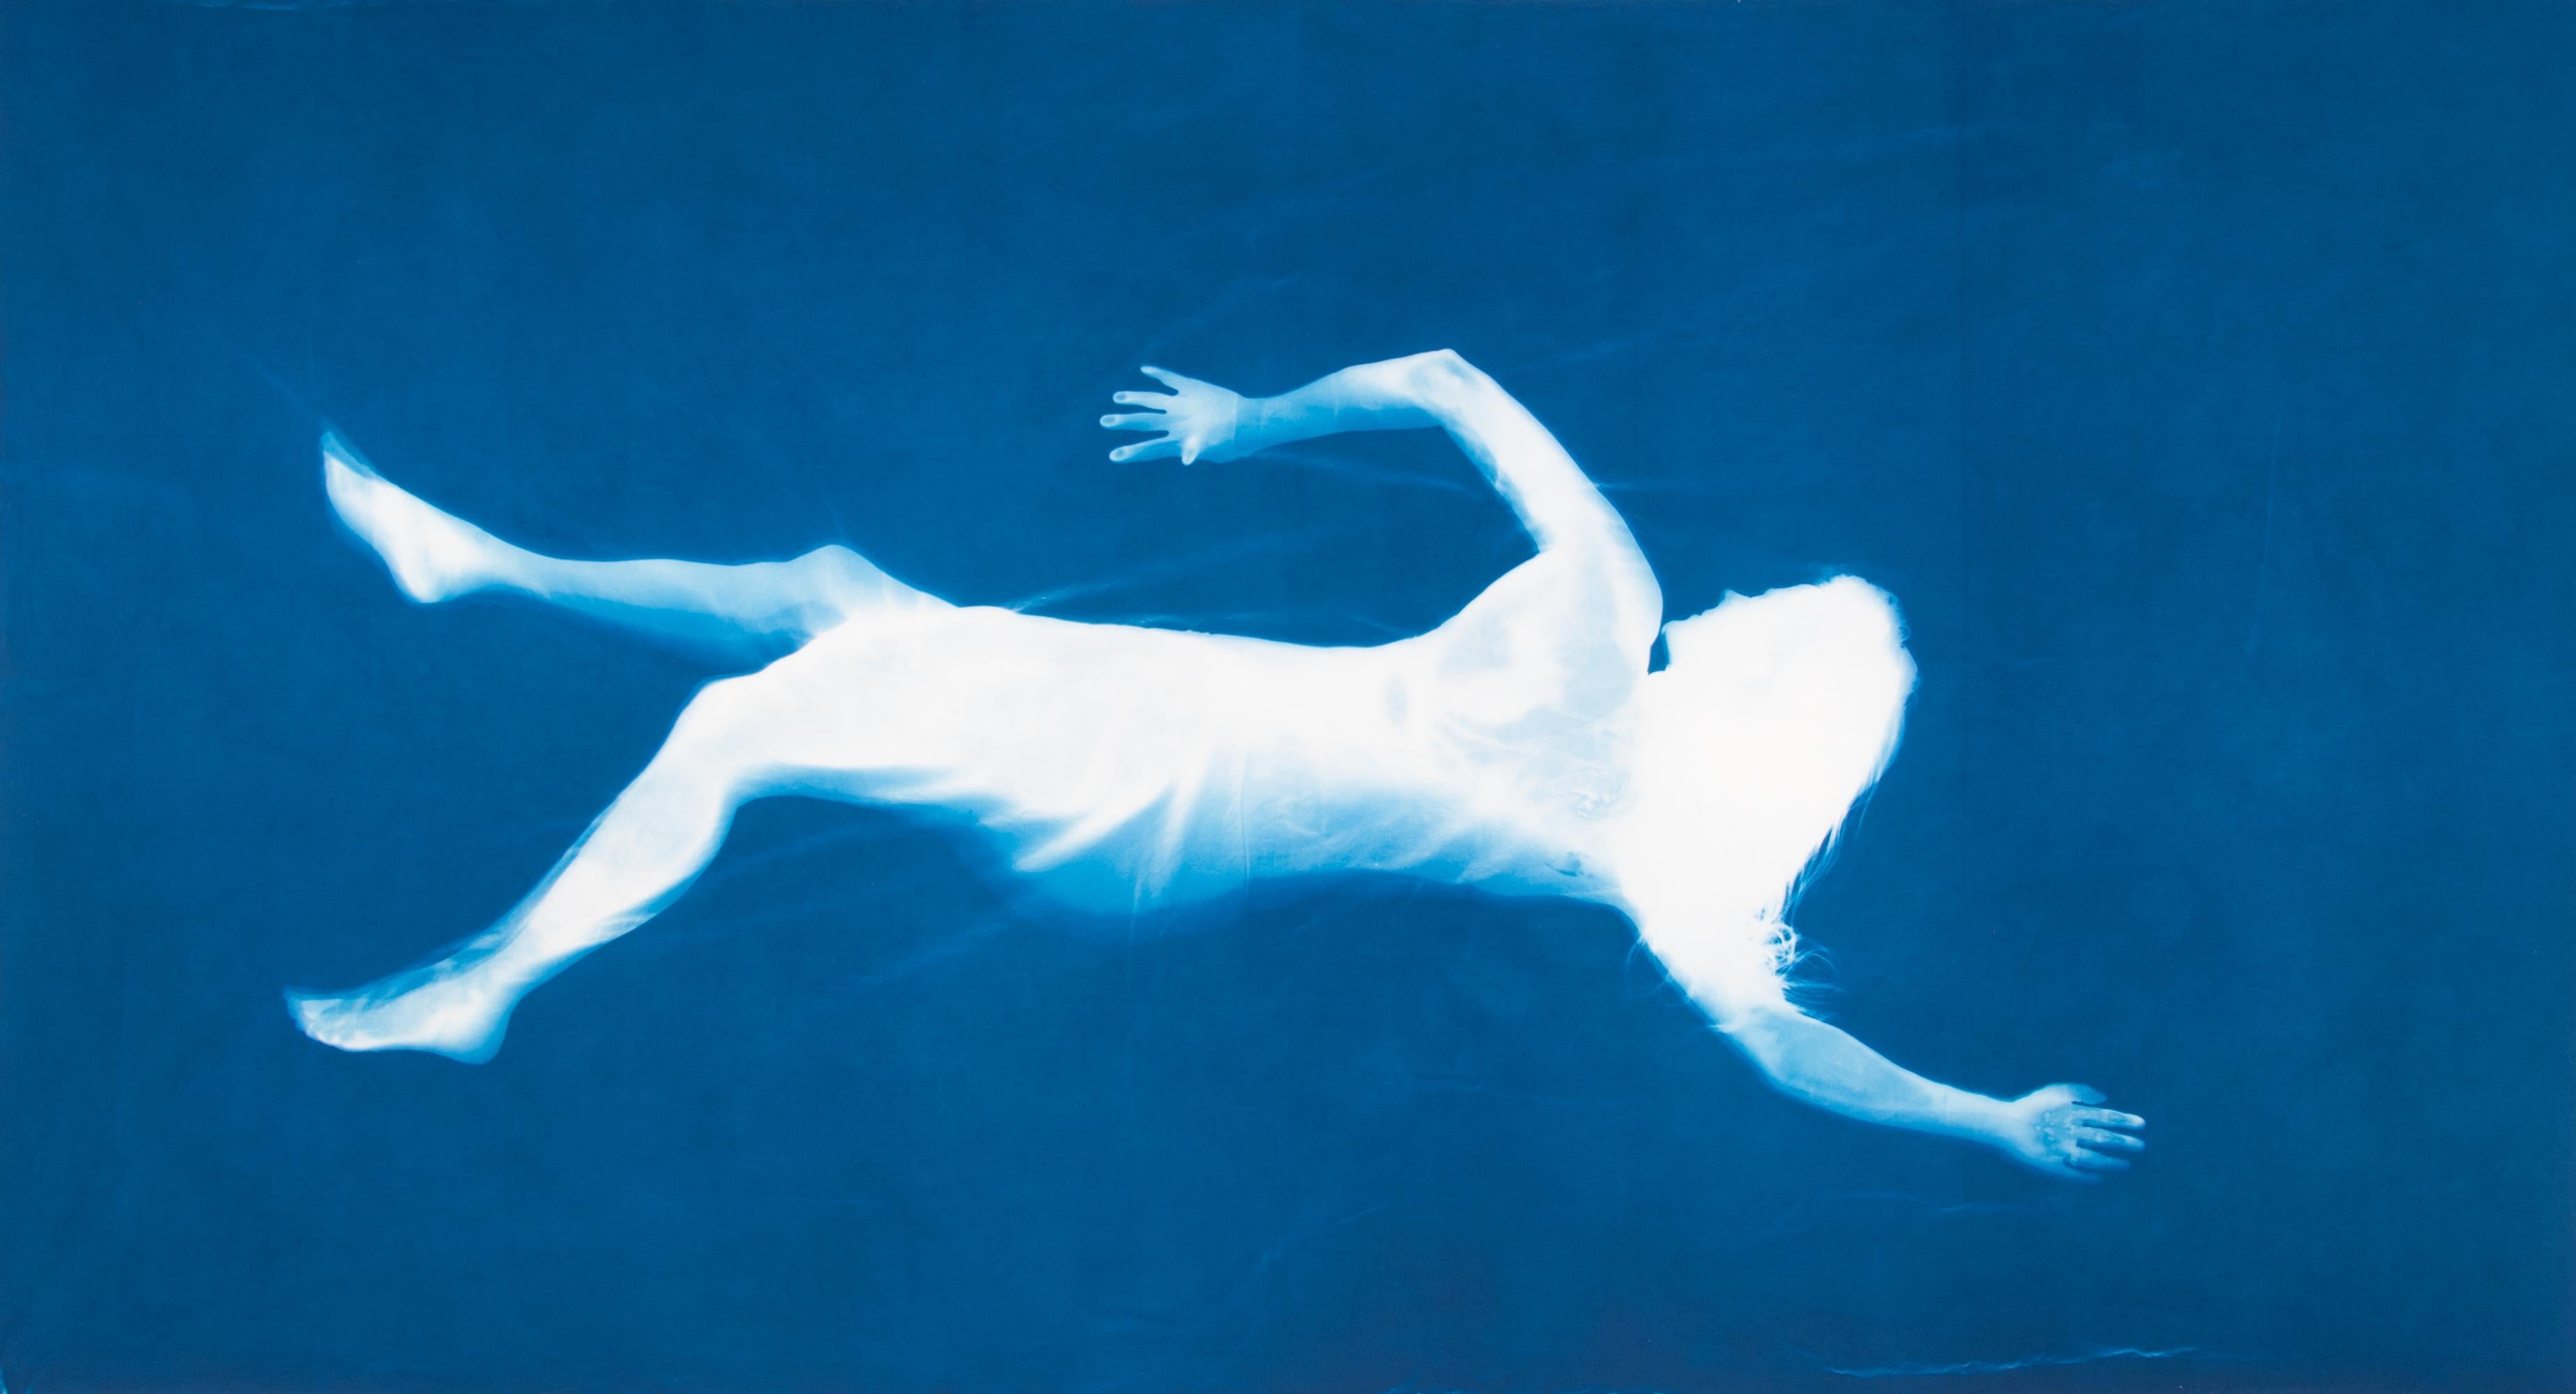 Louisa Armbrust Figurative Photograph - Blue Swimmer—Frame 015